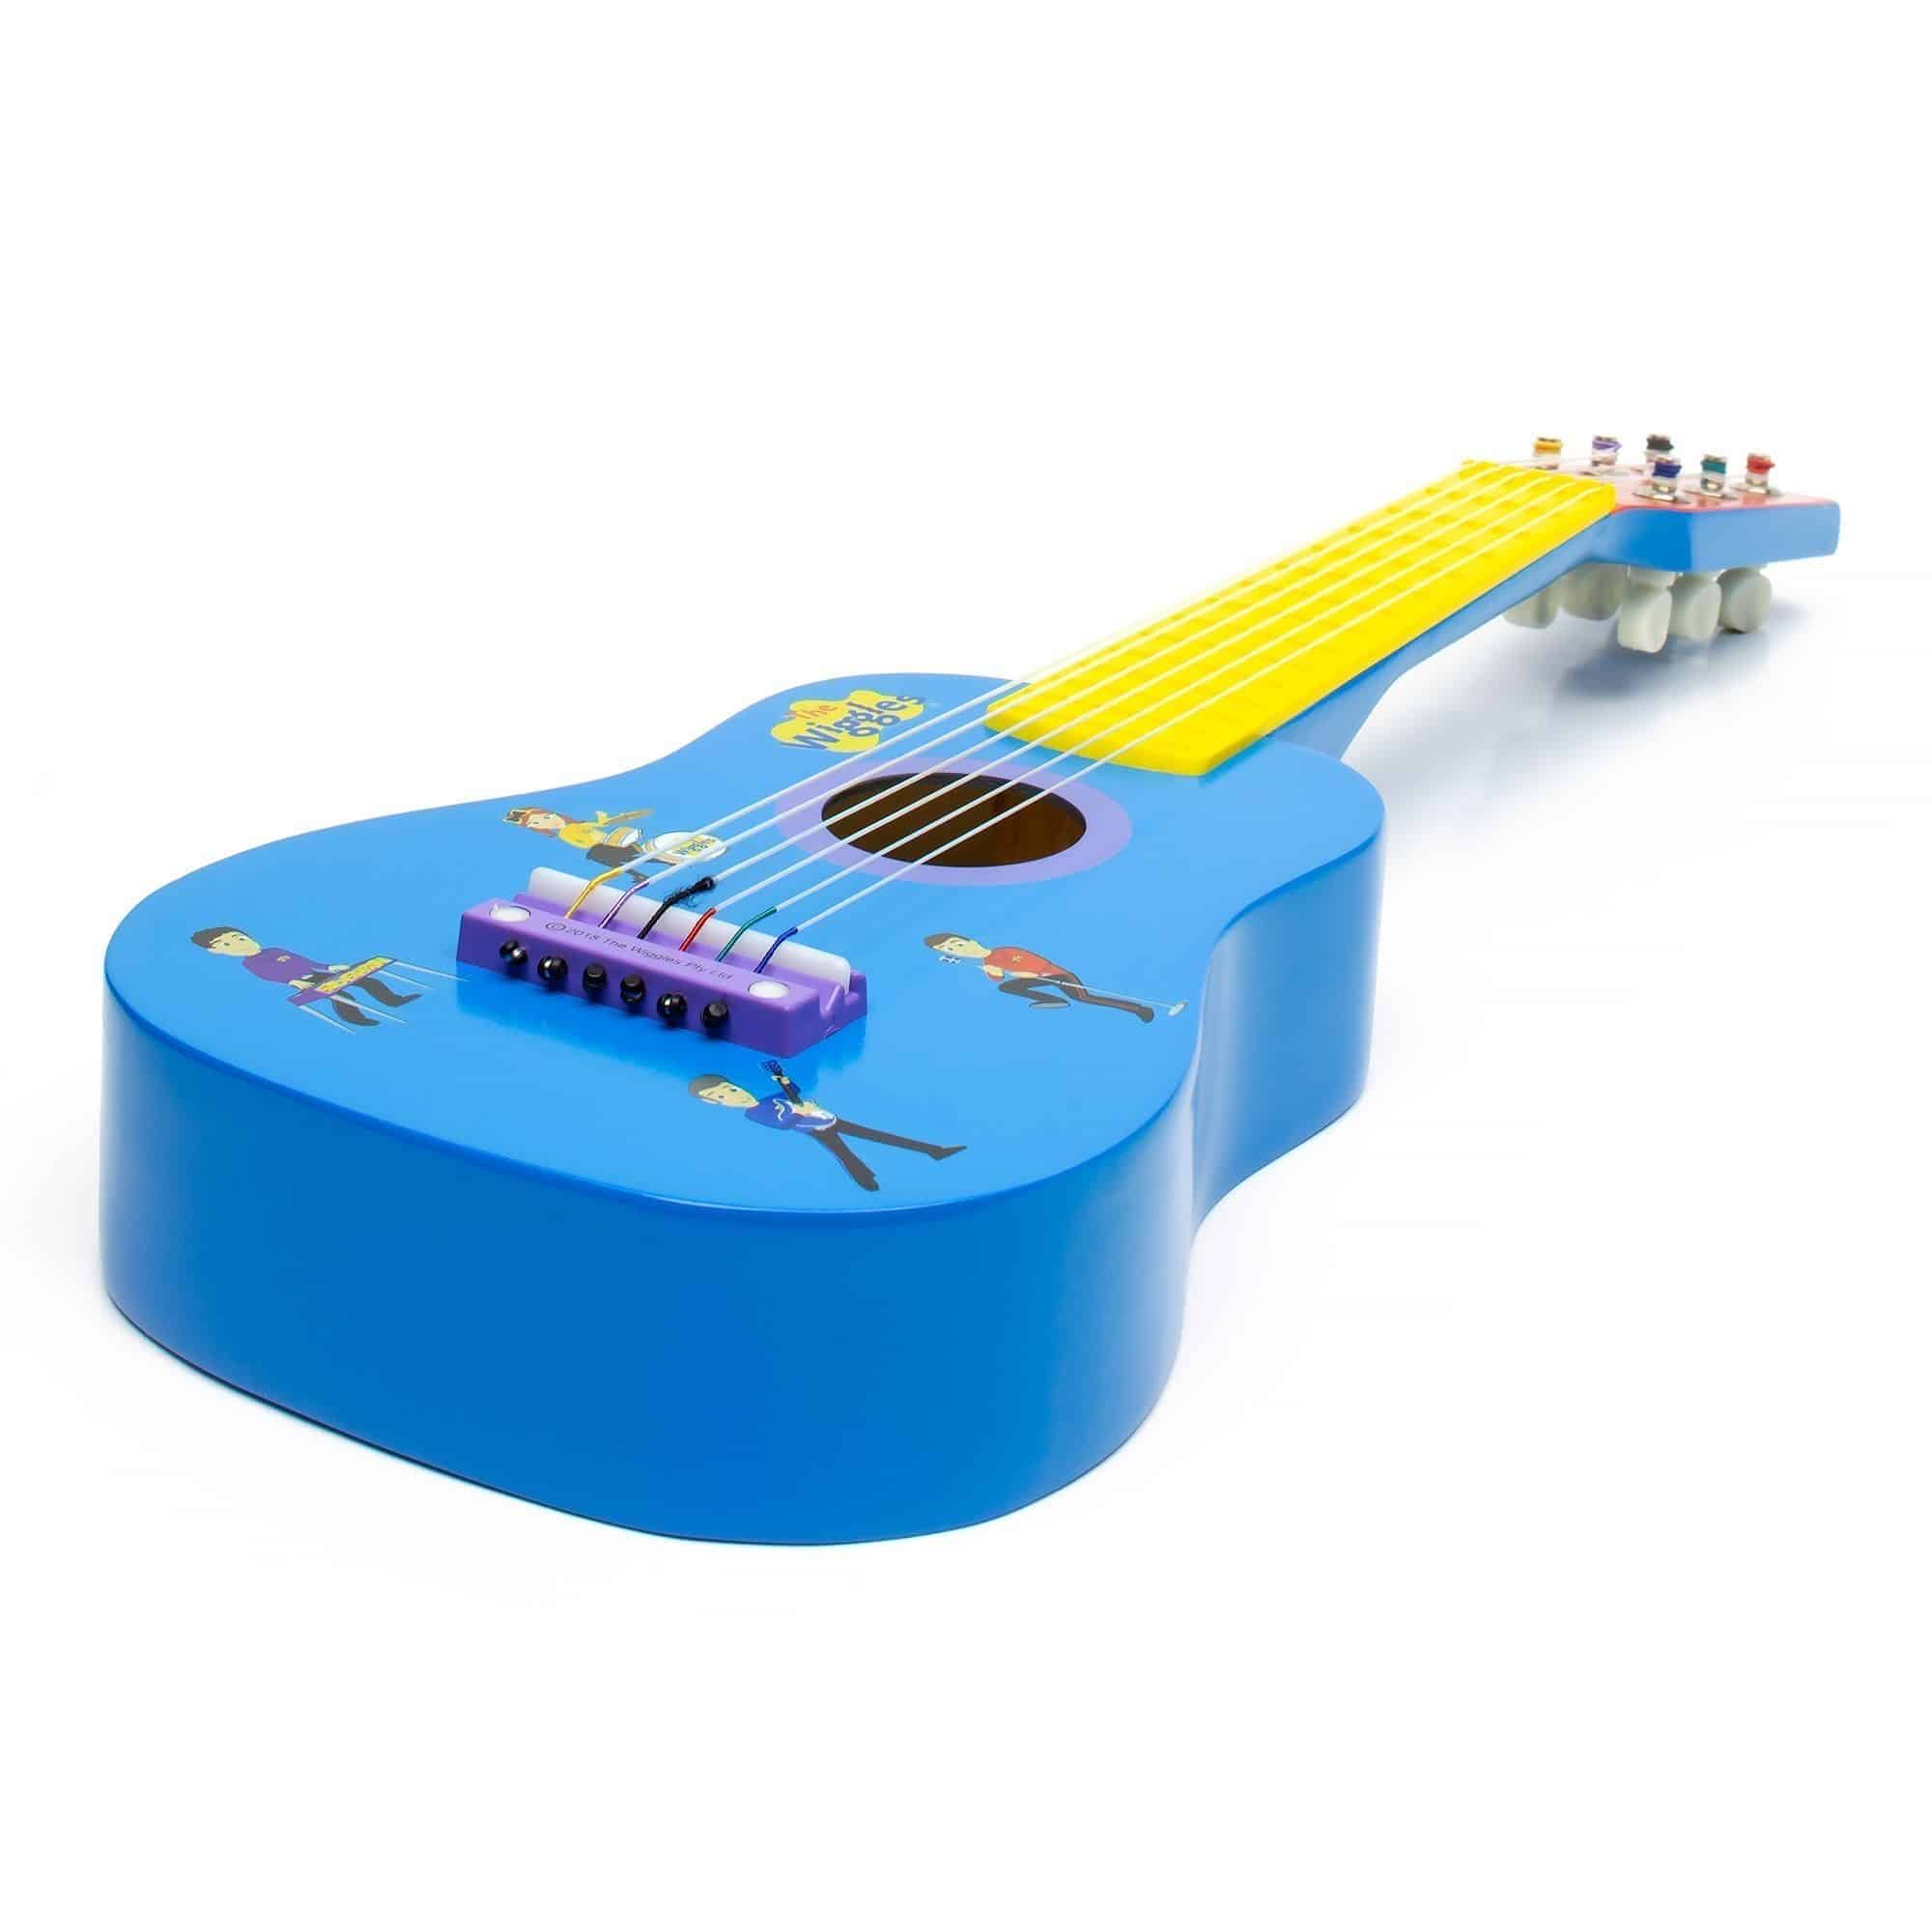 The Wiggles - Mini Wooden Guitar